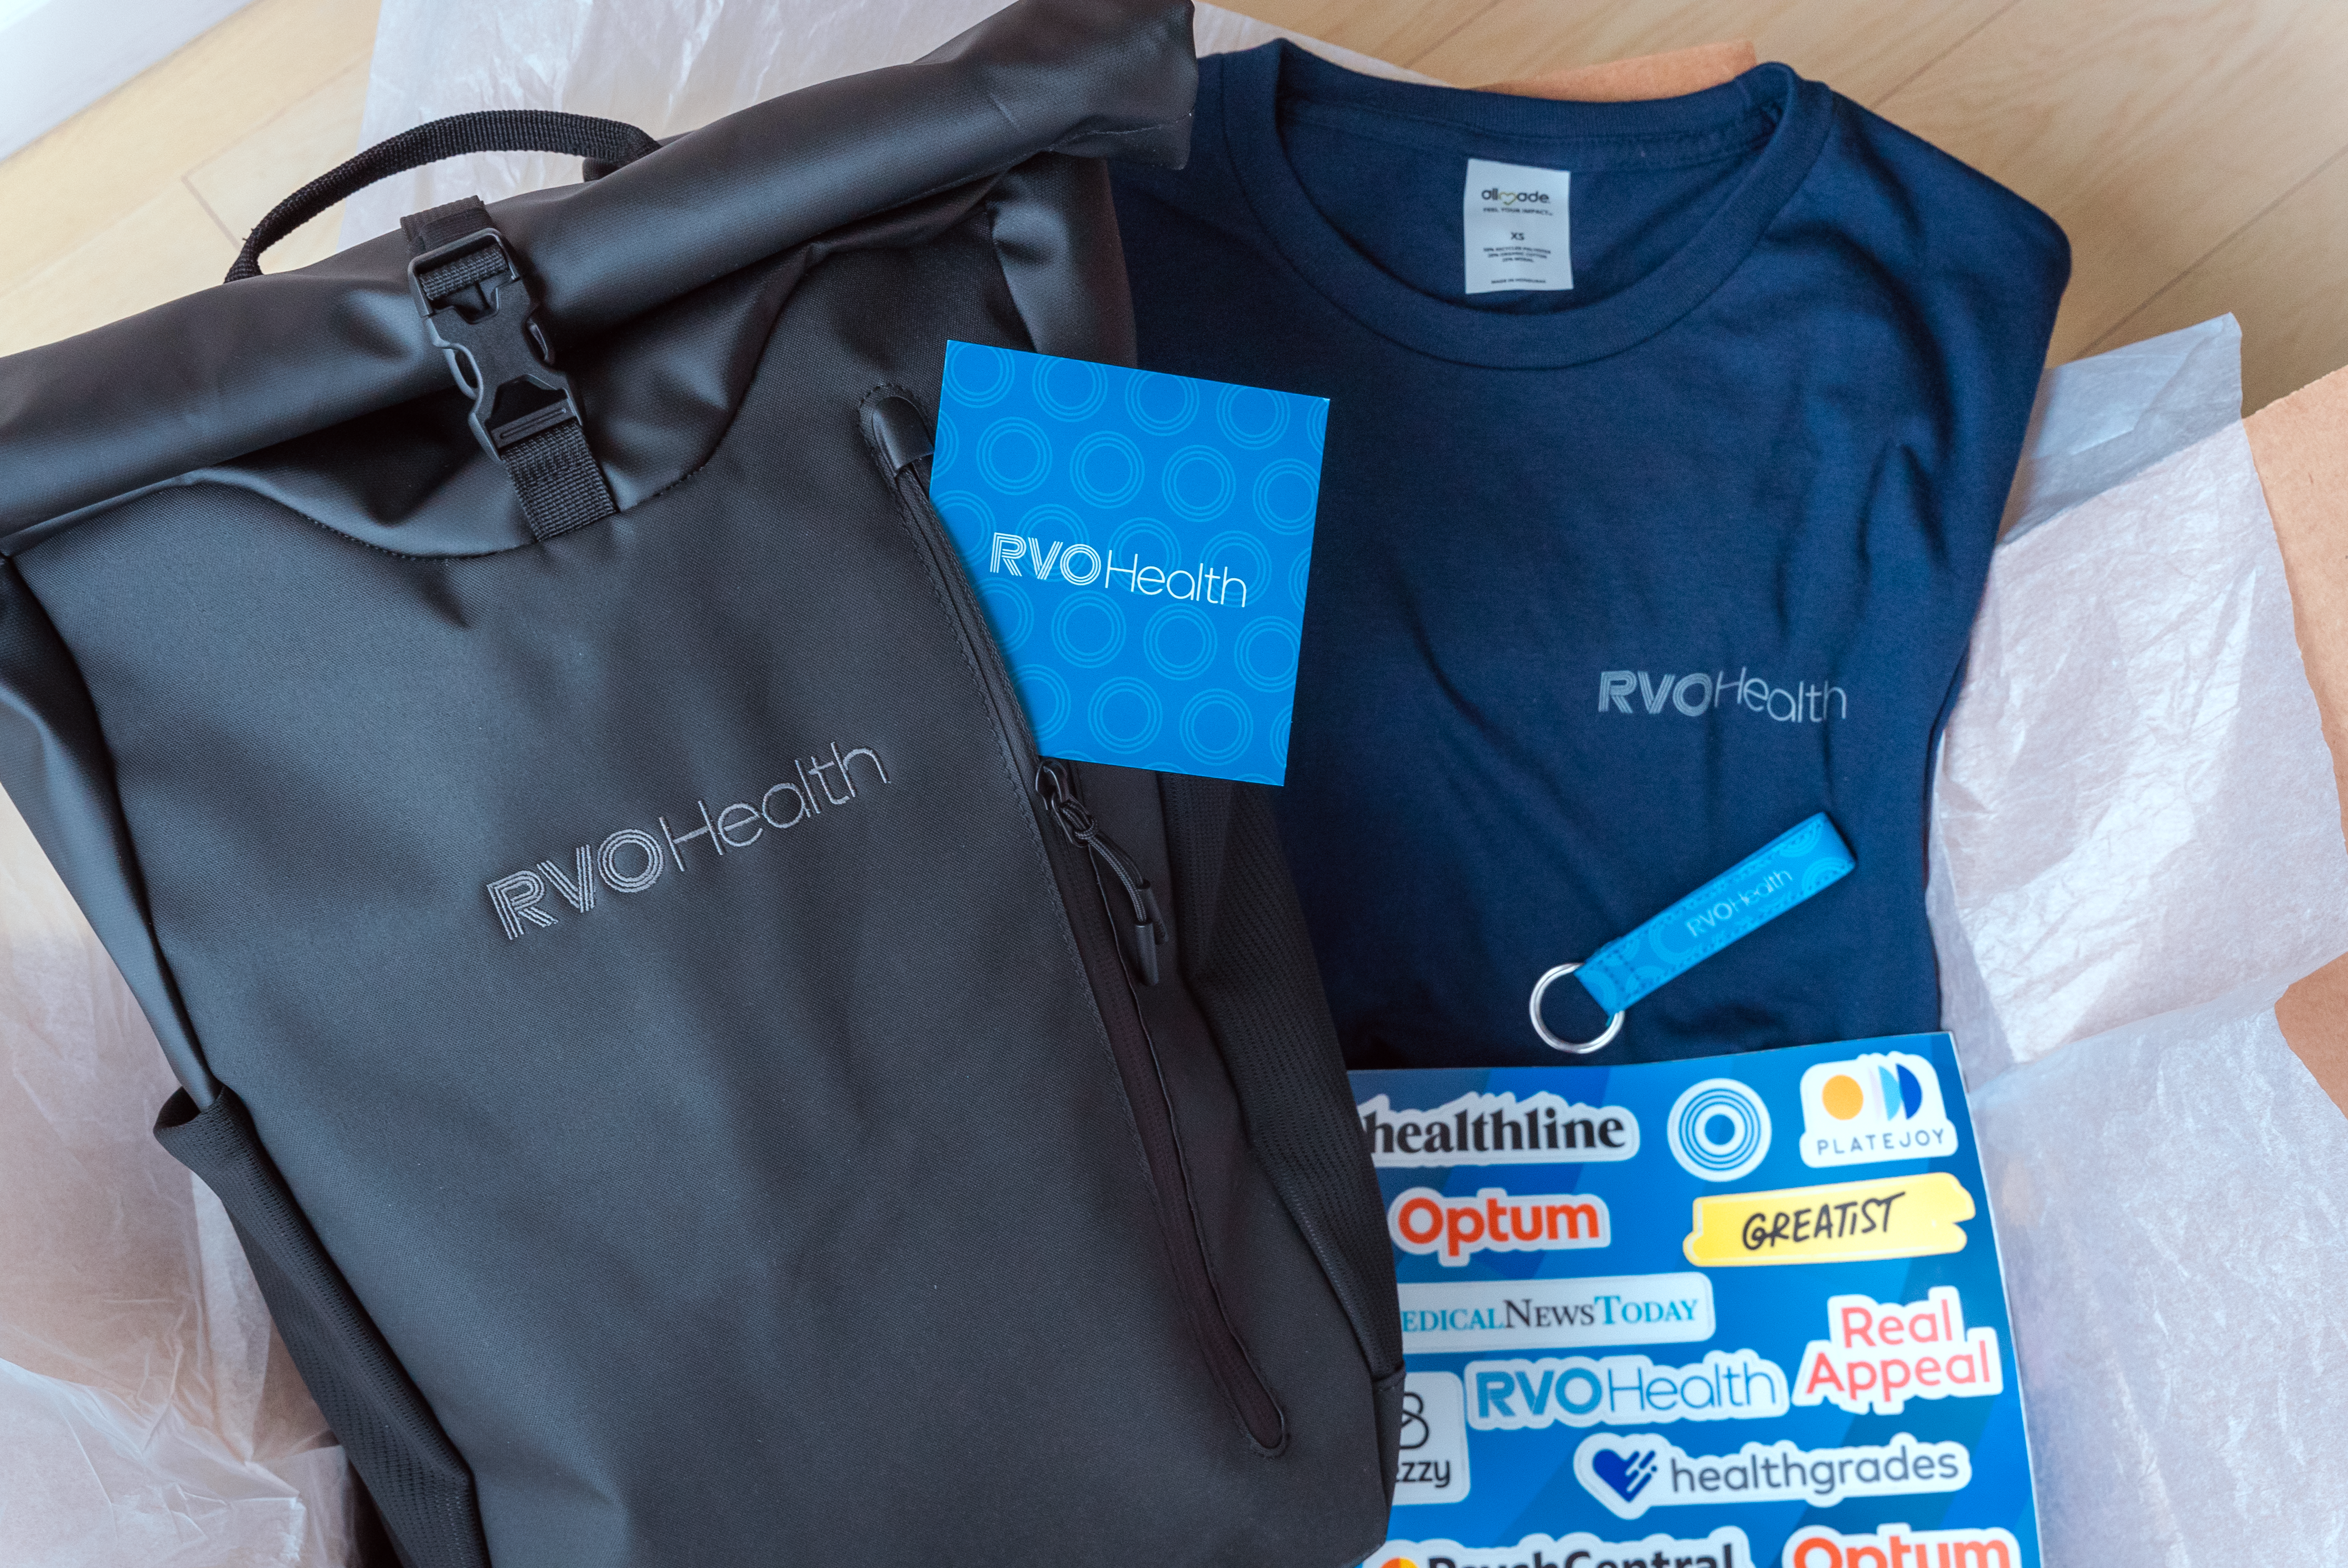 RVO HEalth Employee kit including bag, t-shirt, postcard, sticker sheet, and keychain